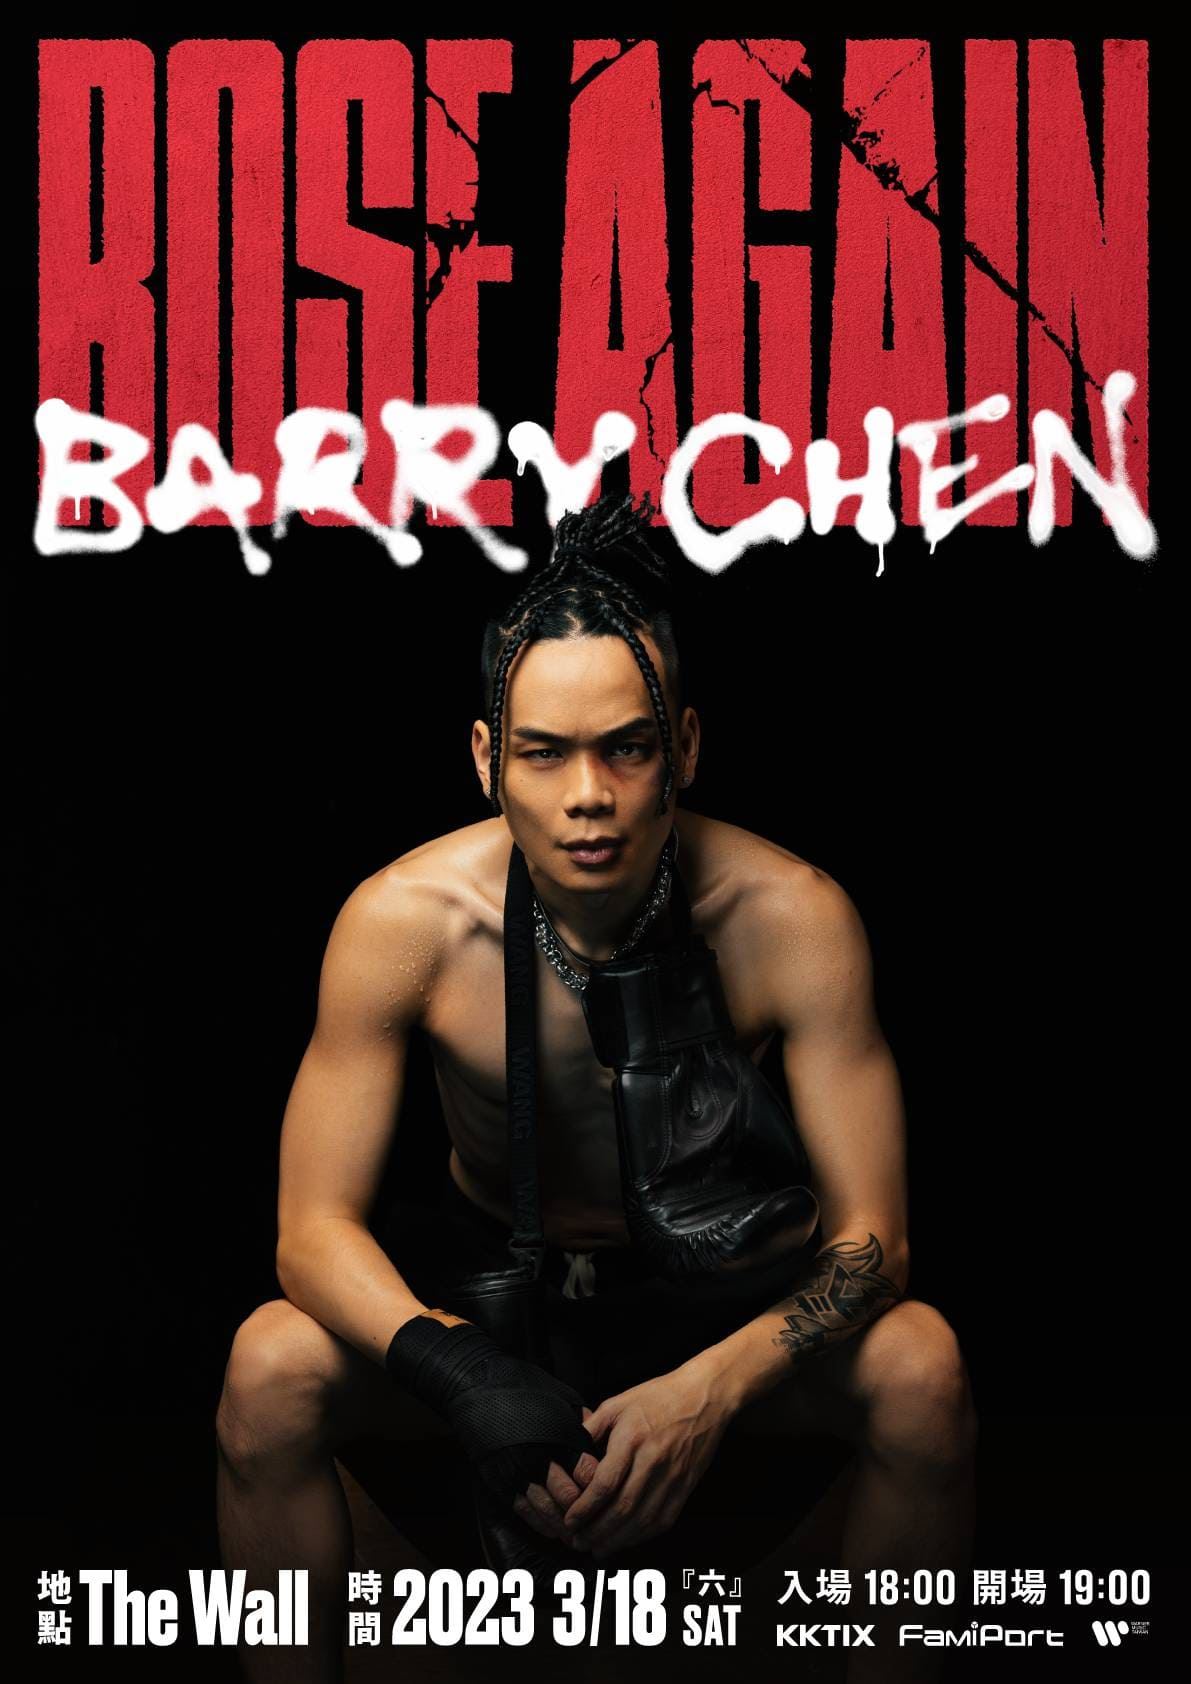 Barry Chen专辑名称致敬NBA球星！分享饶舌之路充满荆棘　真相经过持续报道